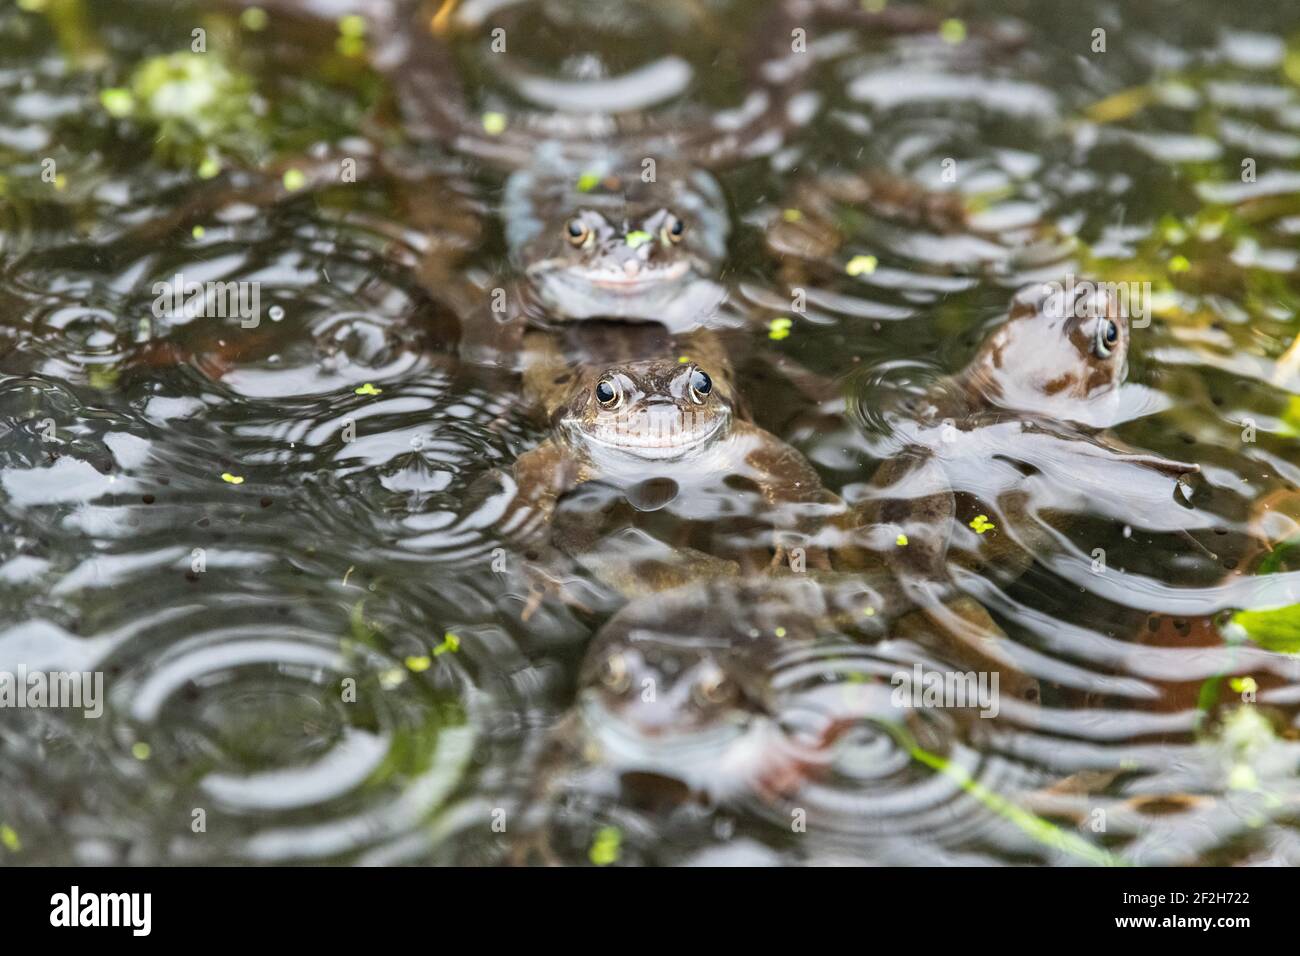 raining frogs